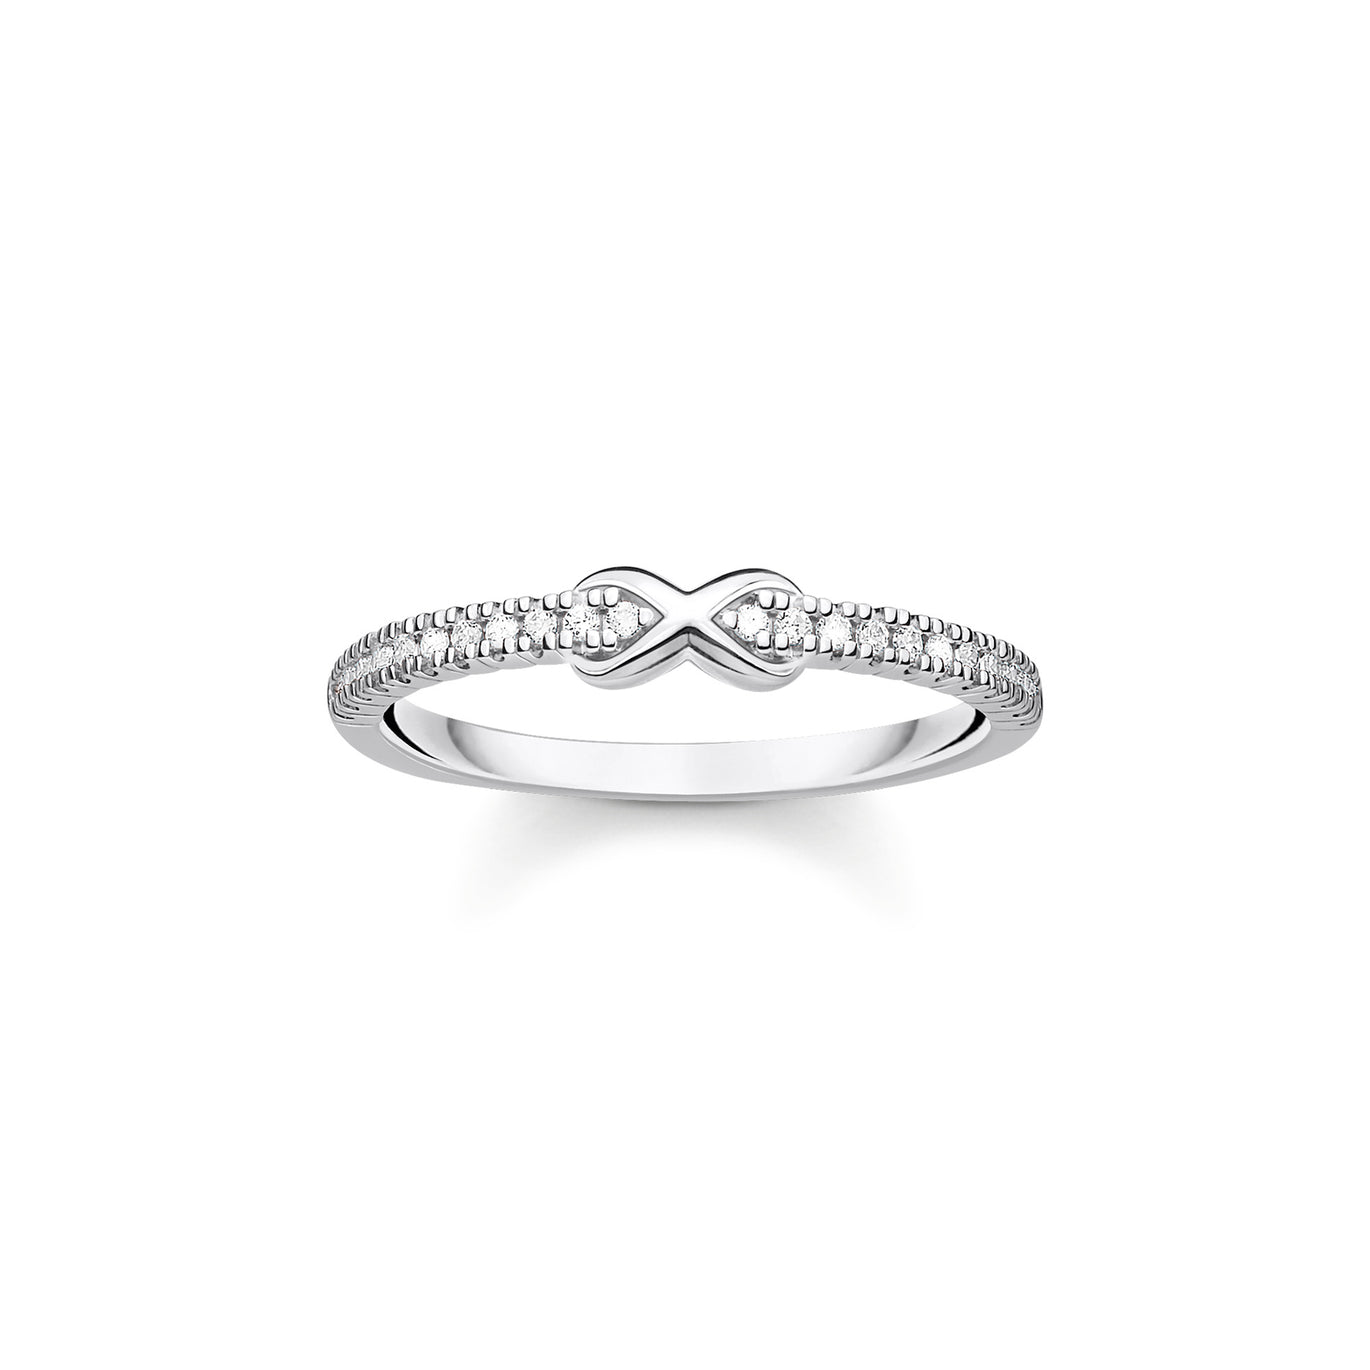 Thomas Sabo Silver Infinity Ring with White Stones